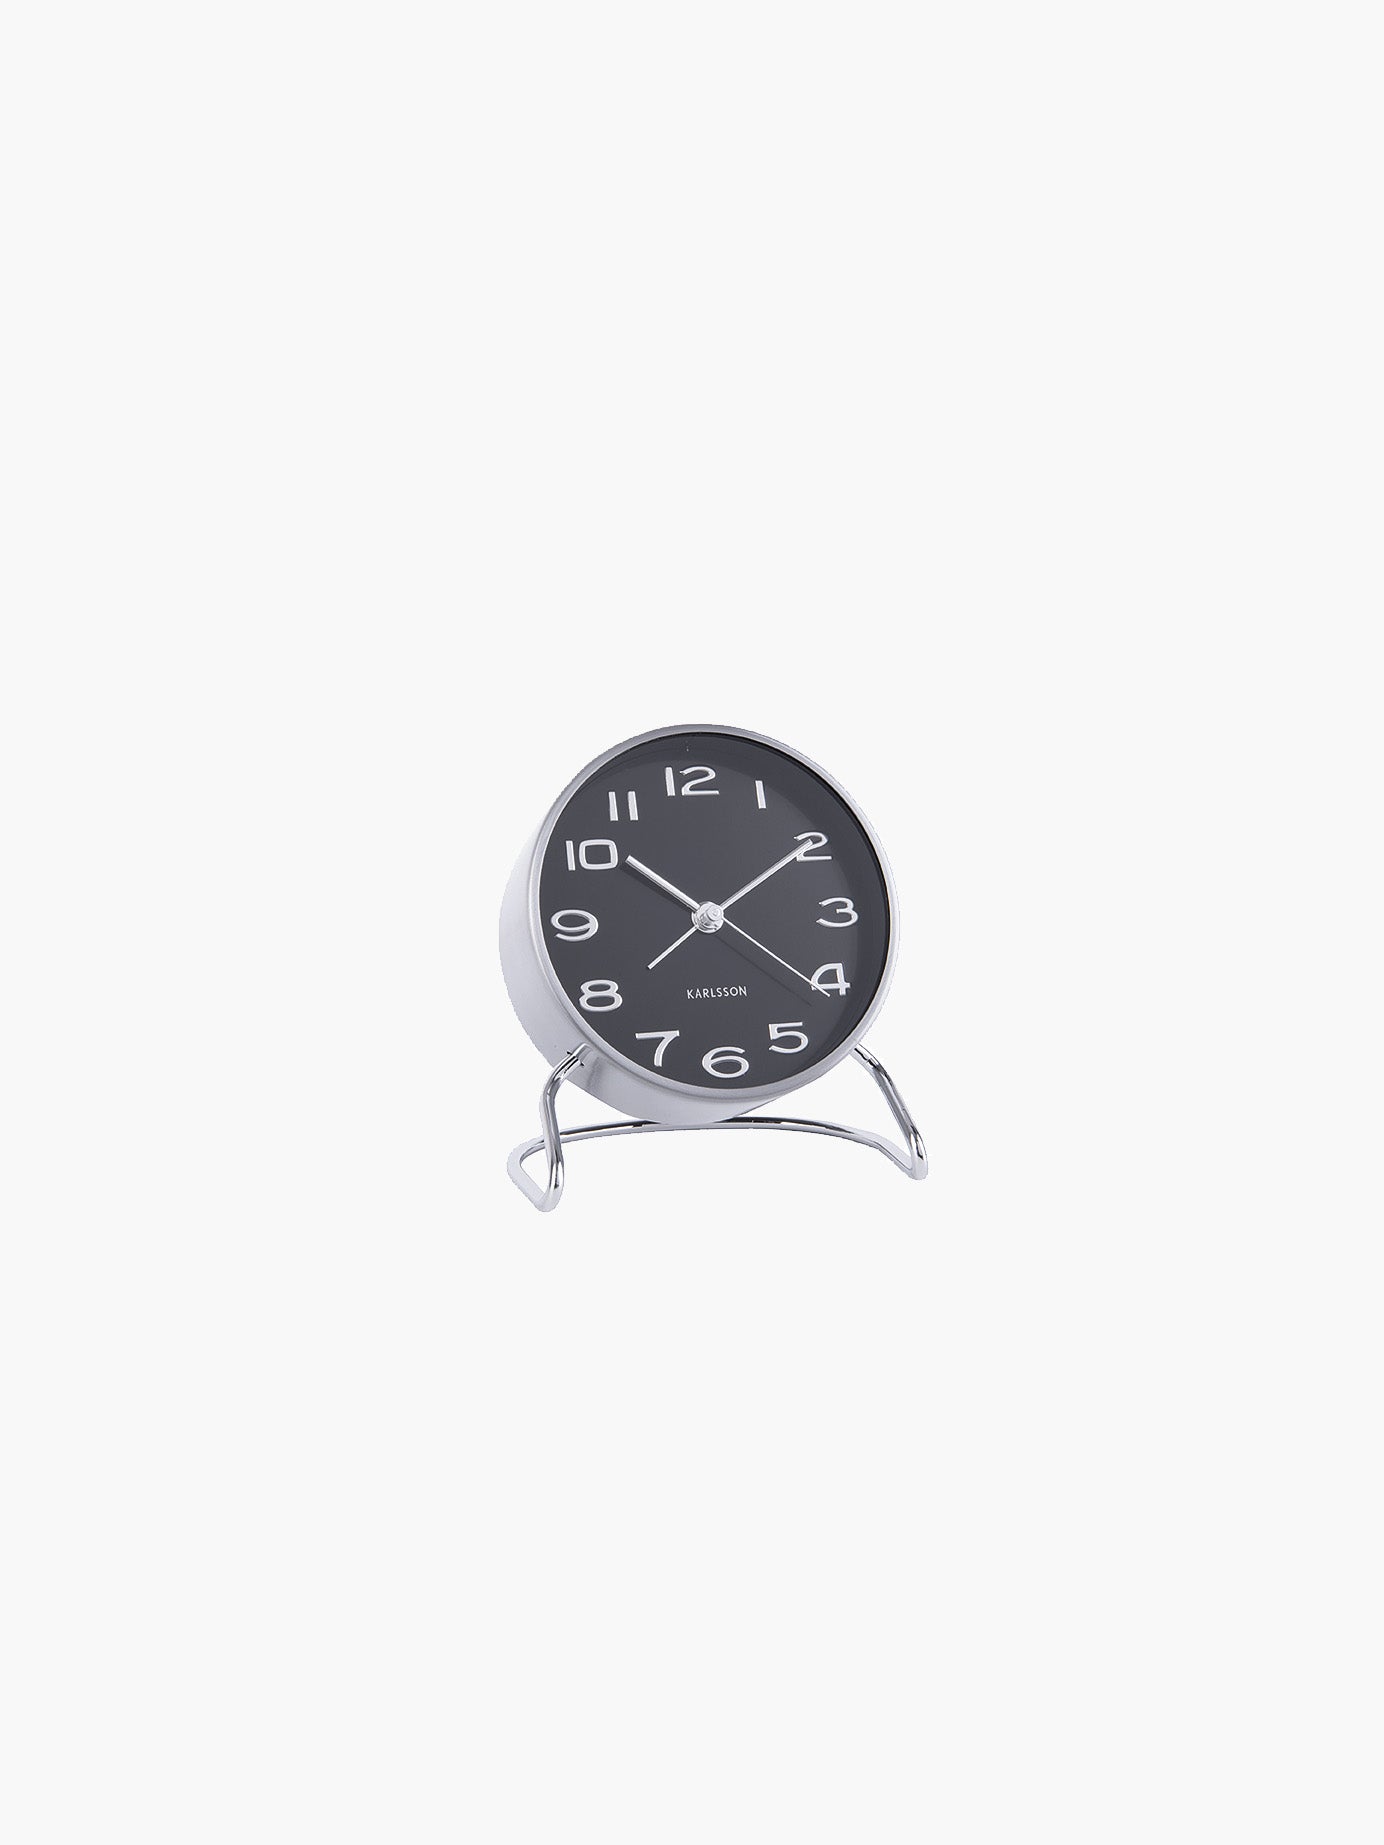 Alarm Clock Classical Numbers